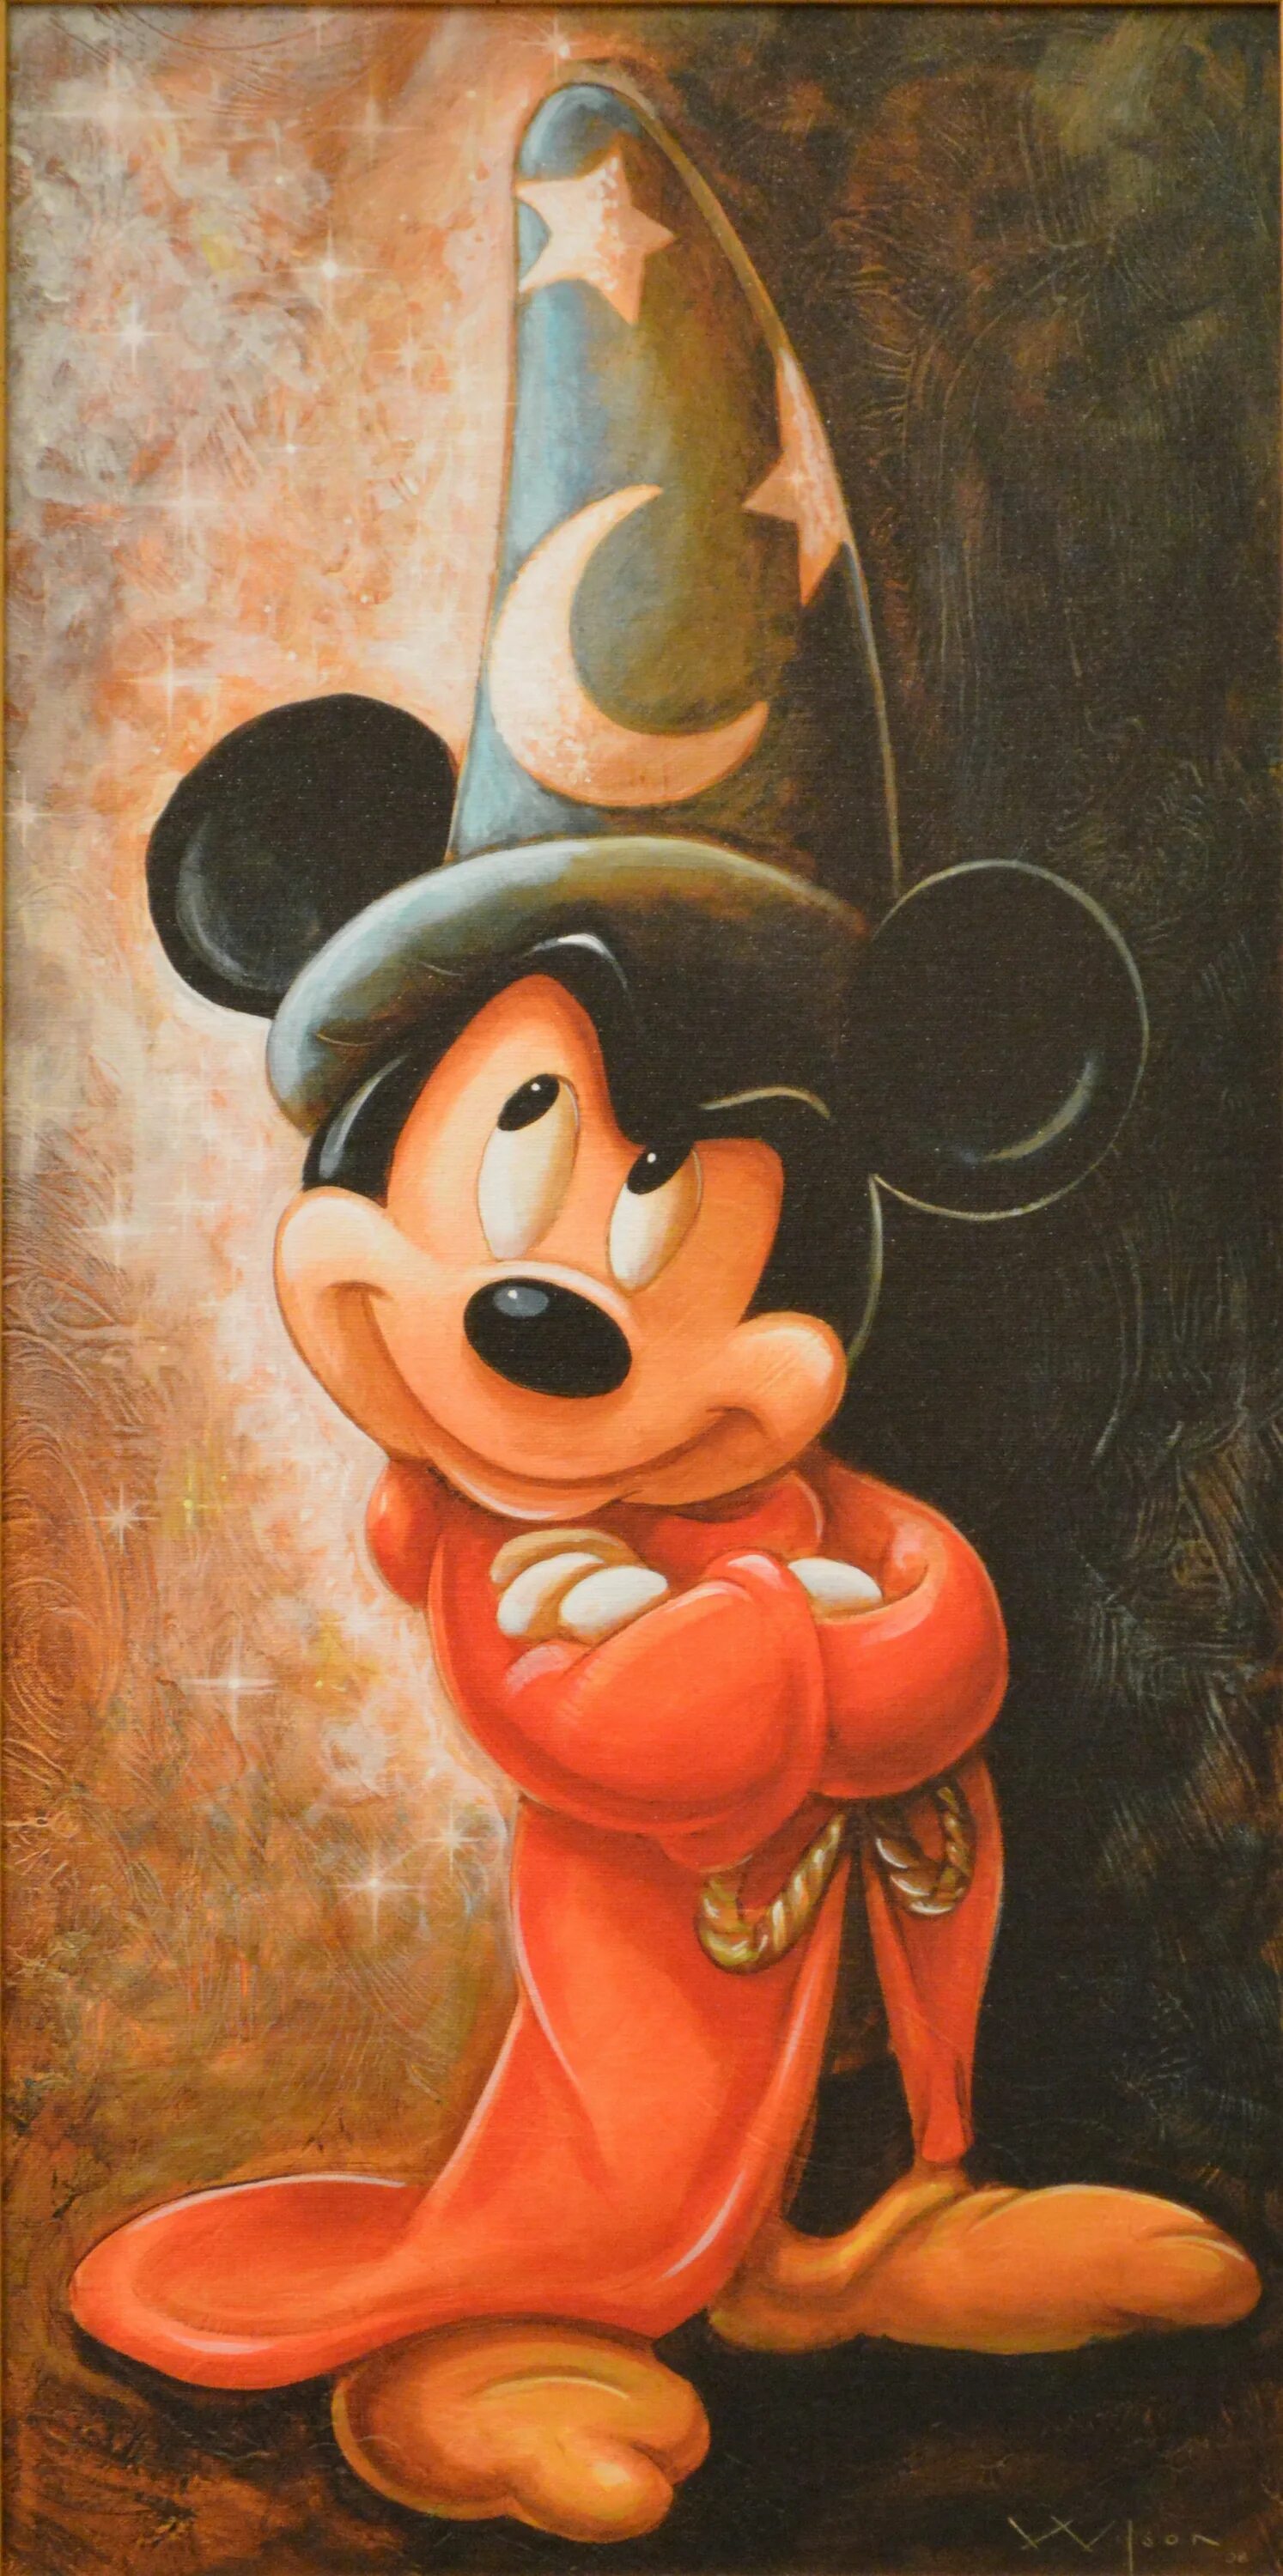 Персонажи на телефон. Мульты Дисней Микки Маус. Герои Дисней Микки Маус. Микки Маус из Диснея. Disney Art Микки Маус Mickey.